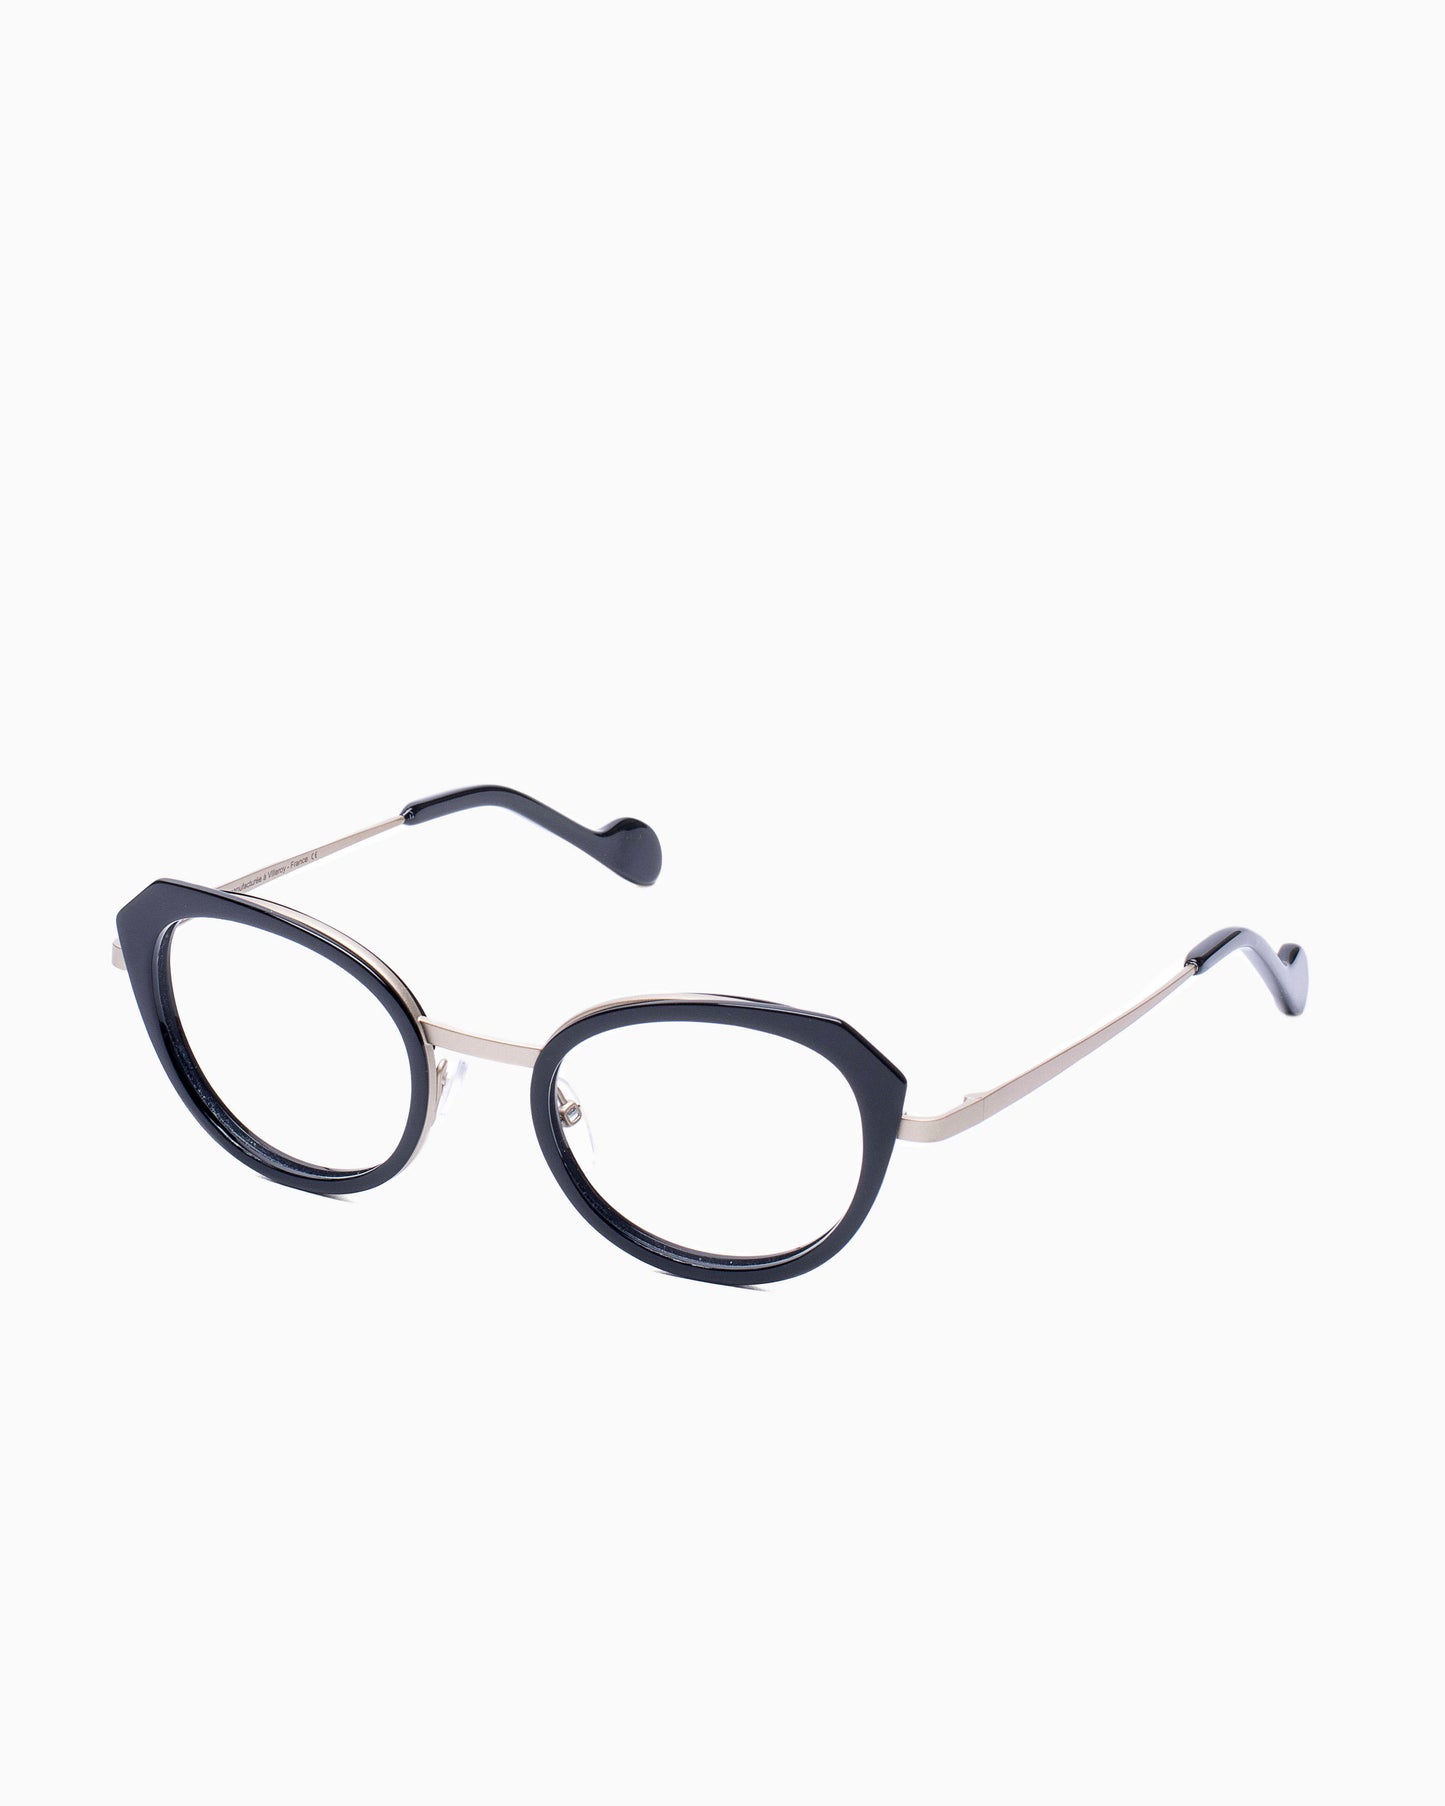 Nao Ned - ArValueg - 14A | Bar à lunettes